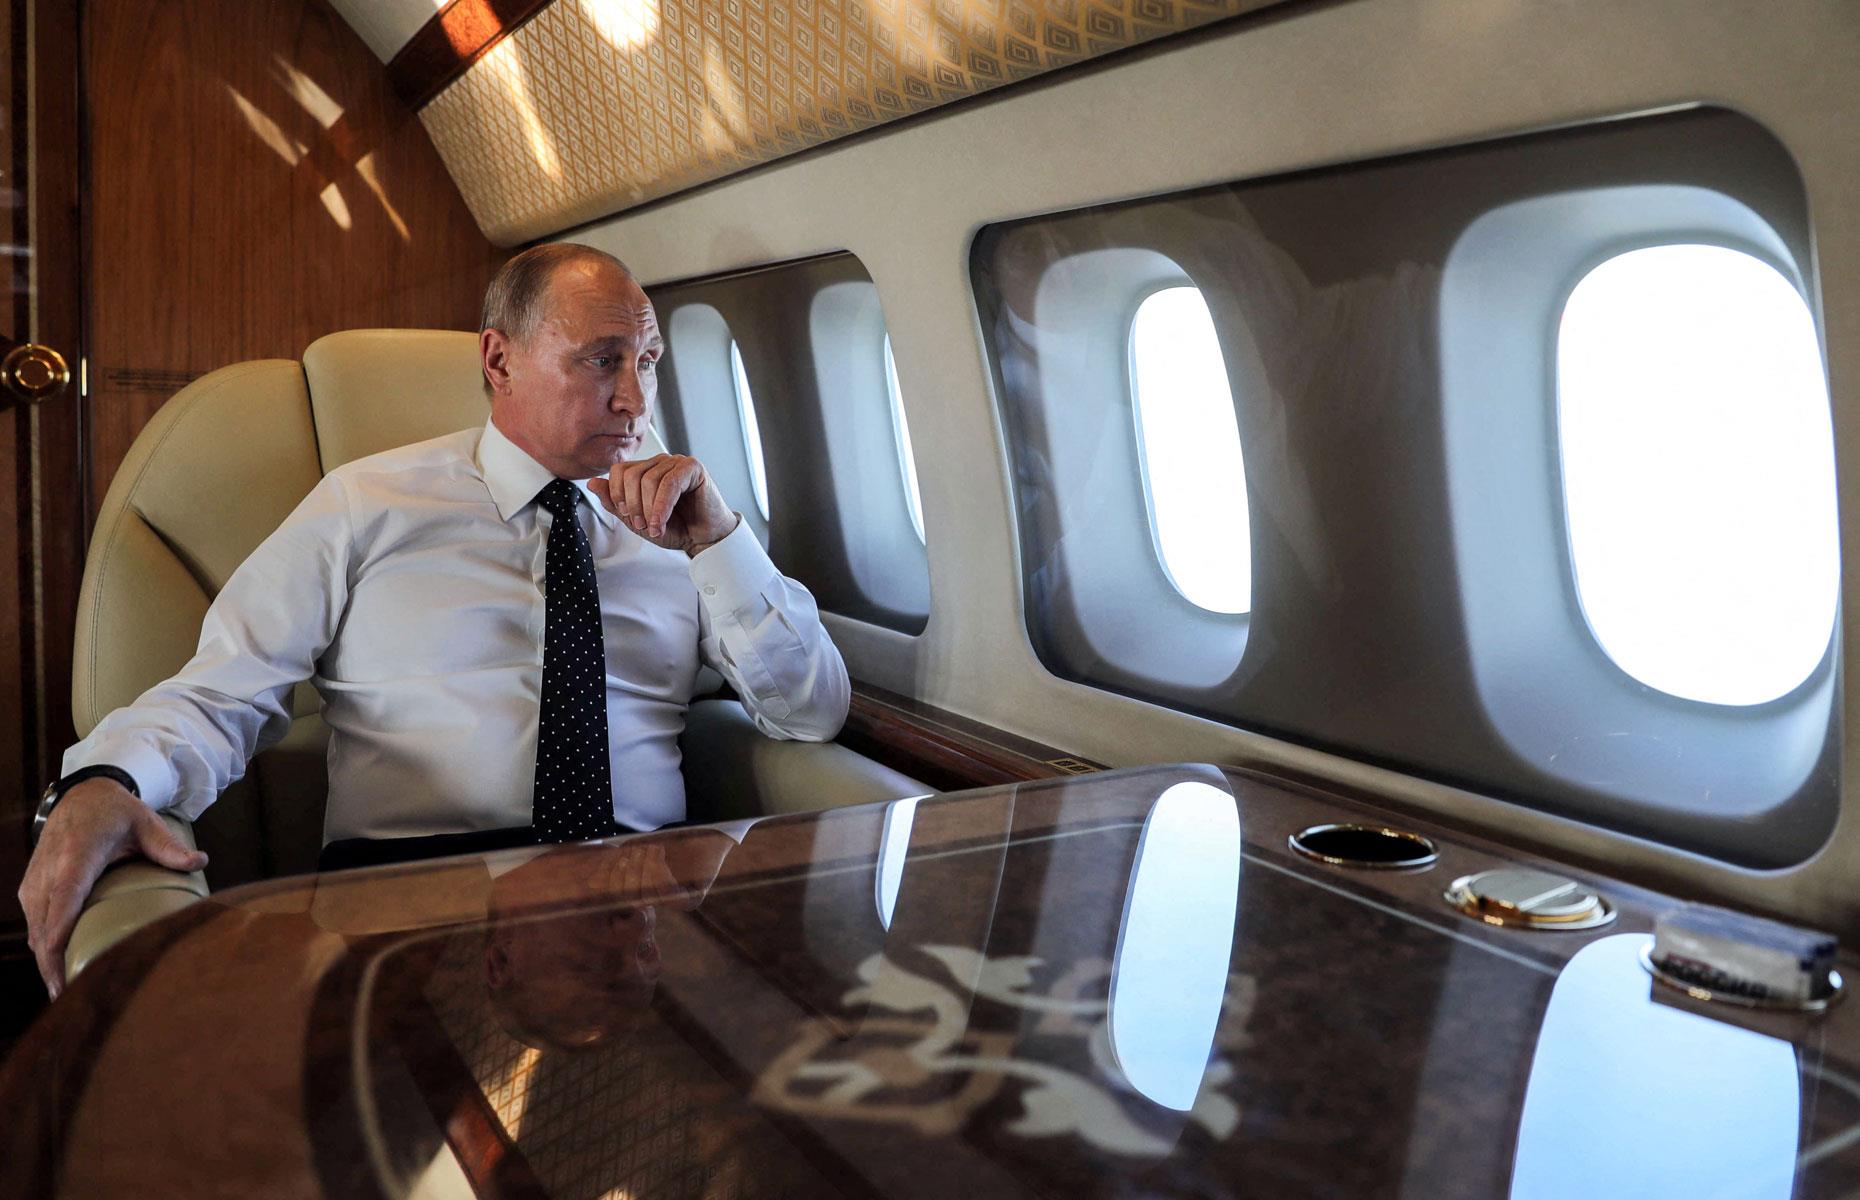 Putin's luxury aircraft 